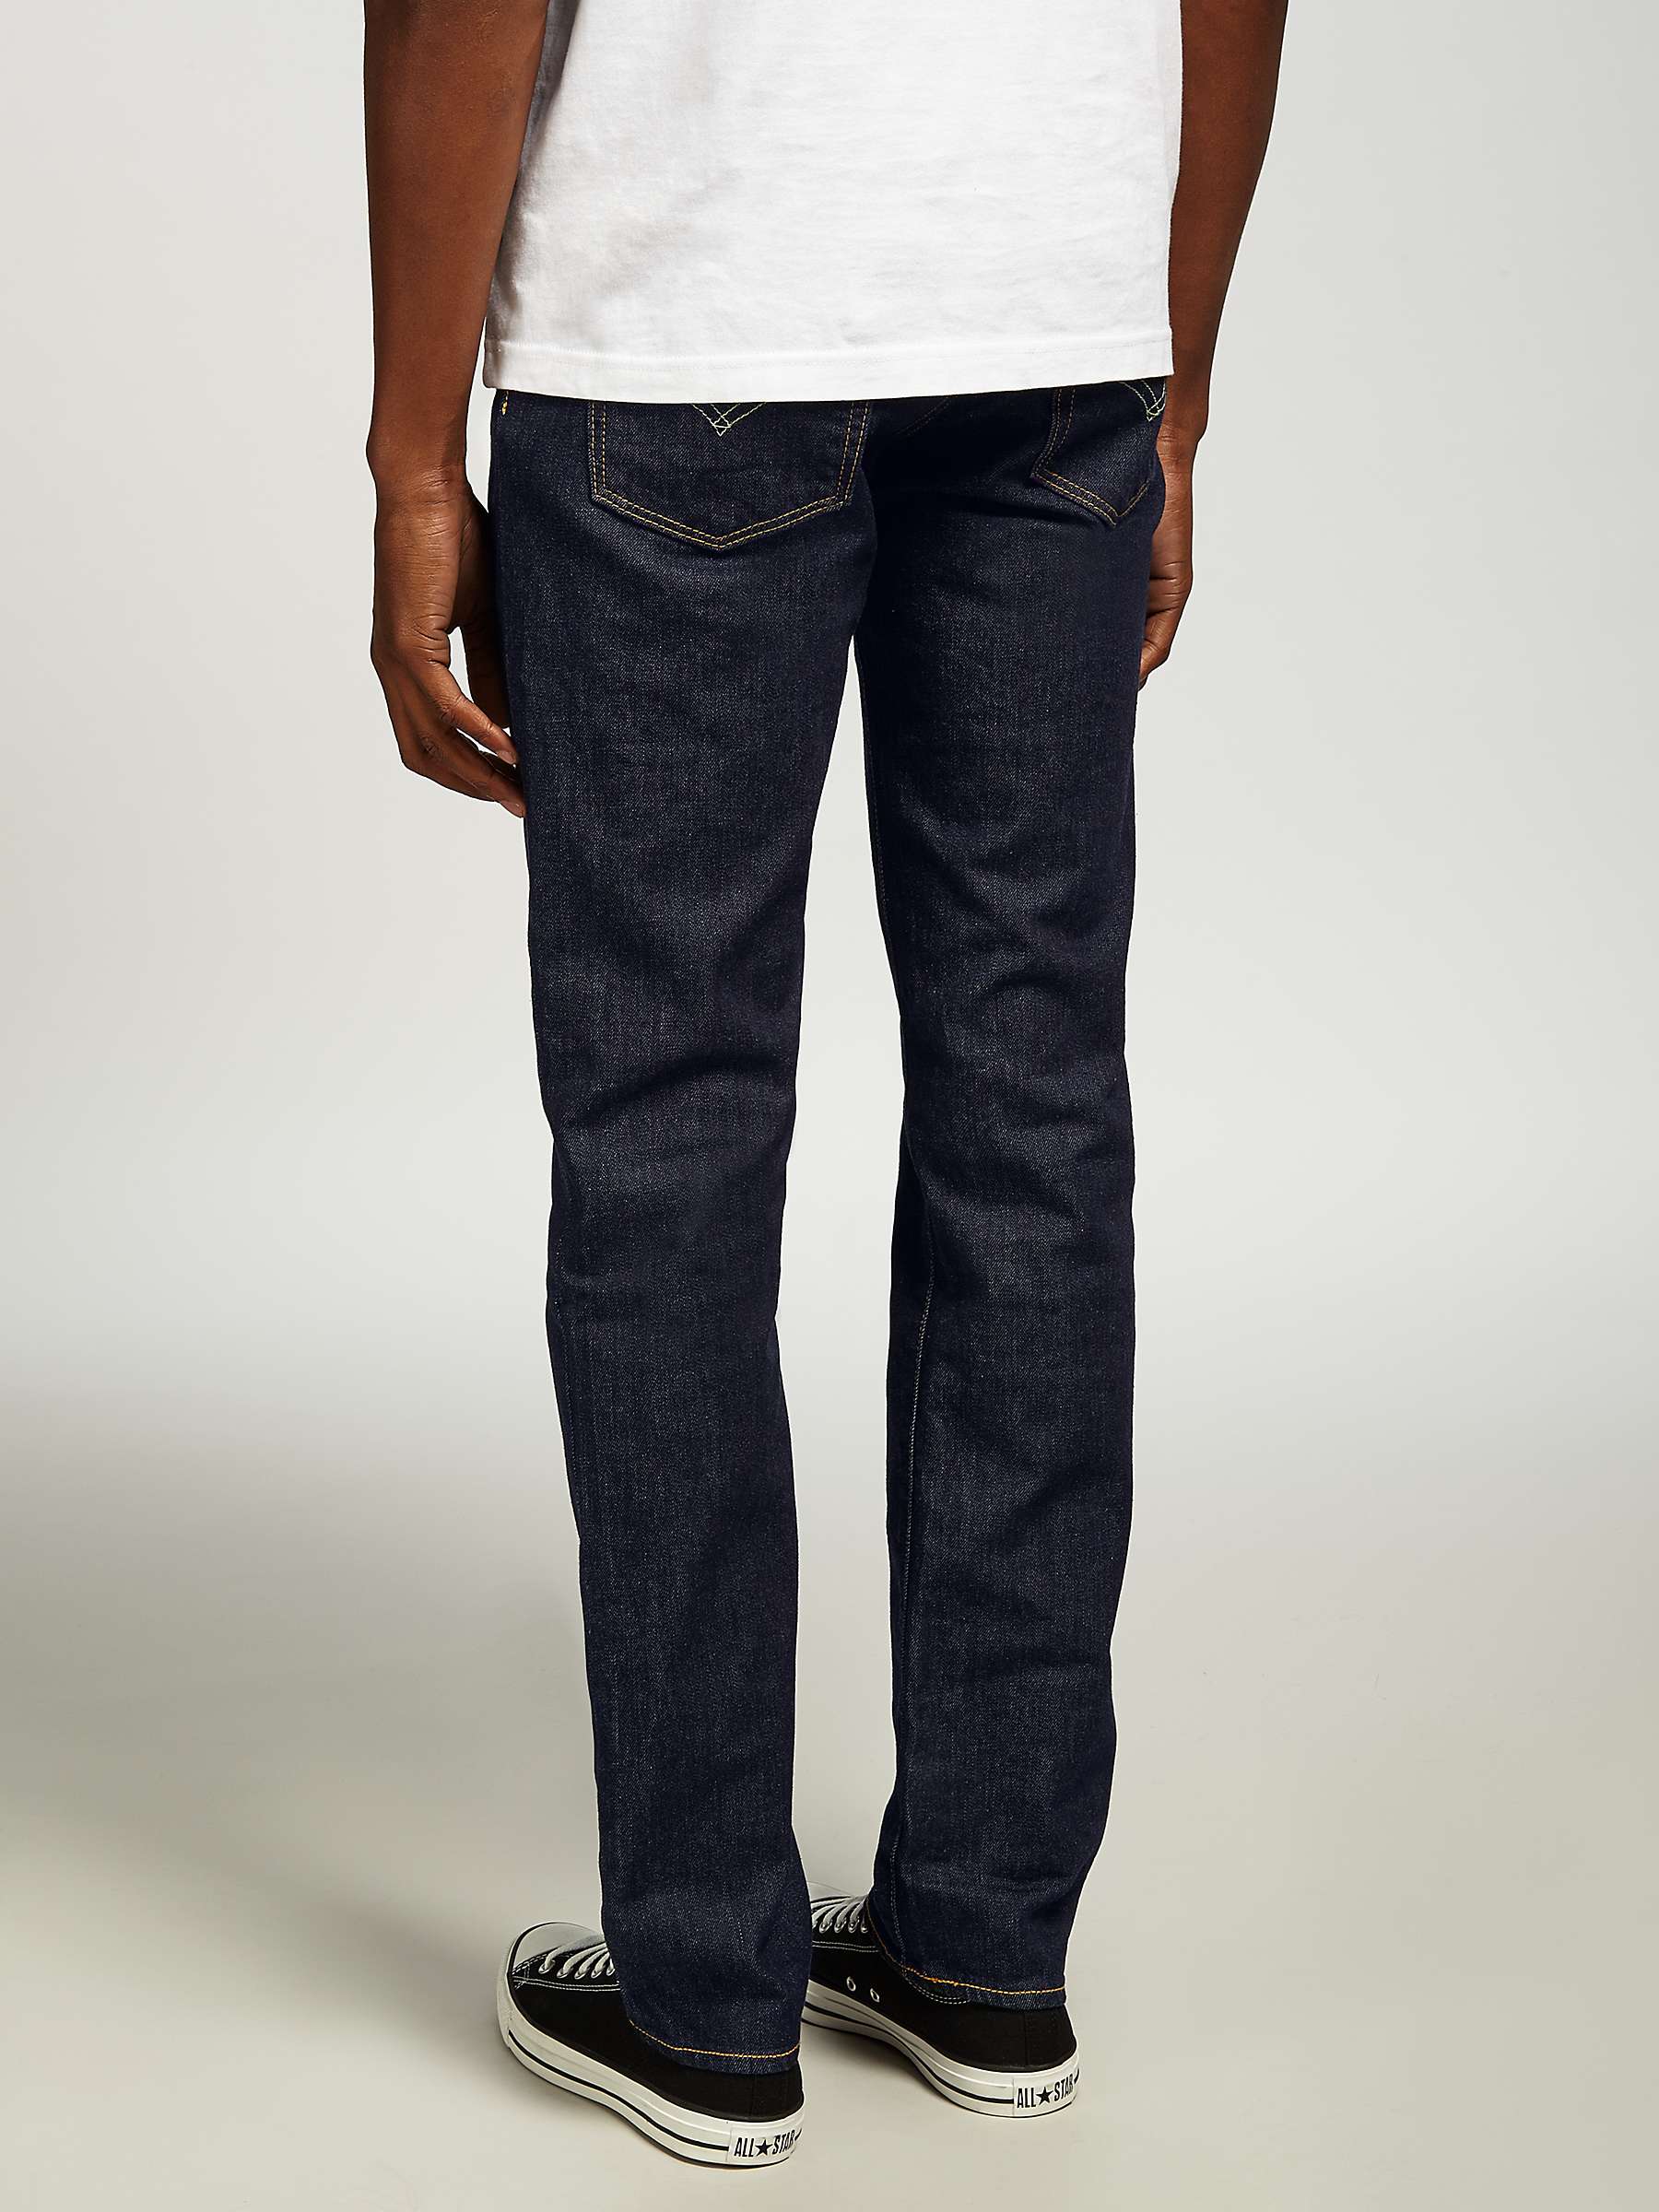 Levi's 511 Slim Fit Rock Cod Jeans, Flat Indigo at John Lewis & Partners